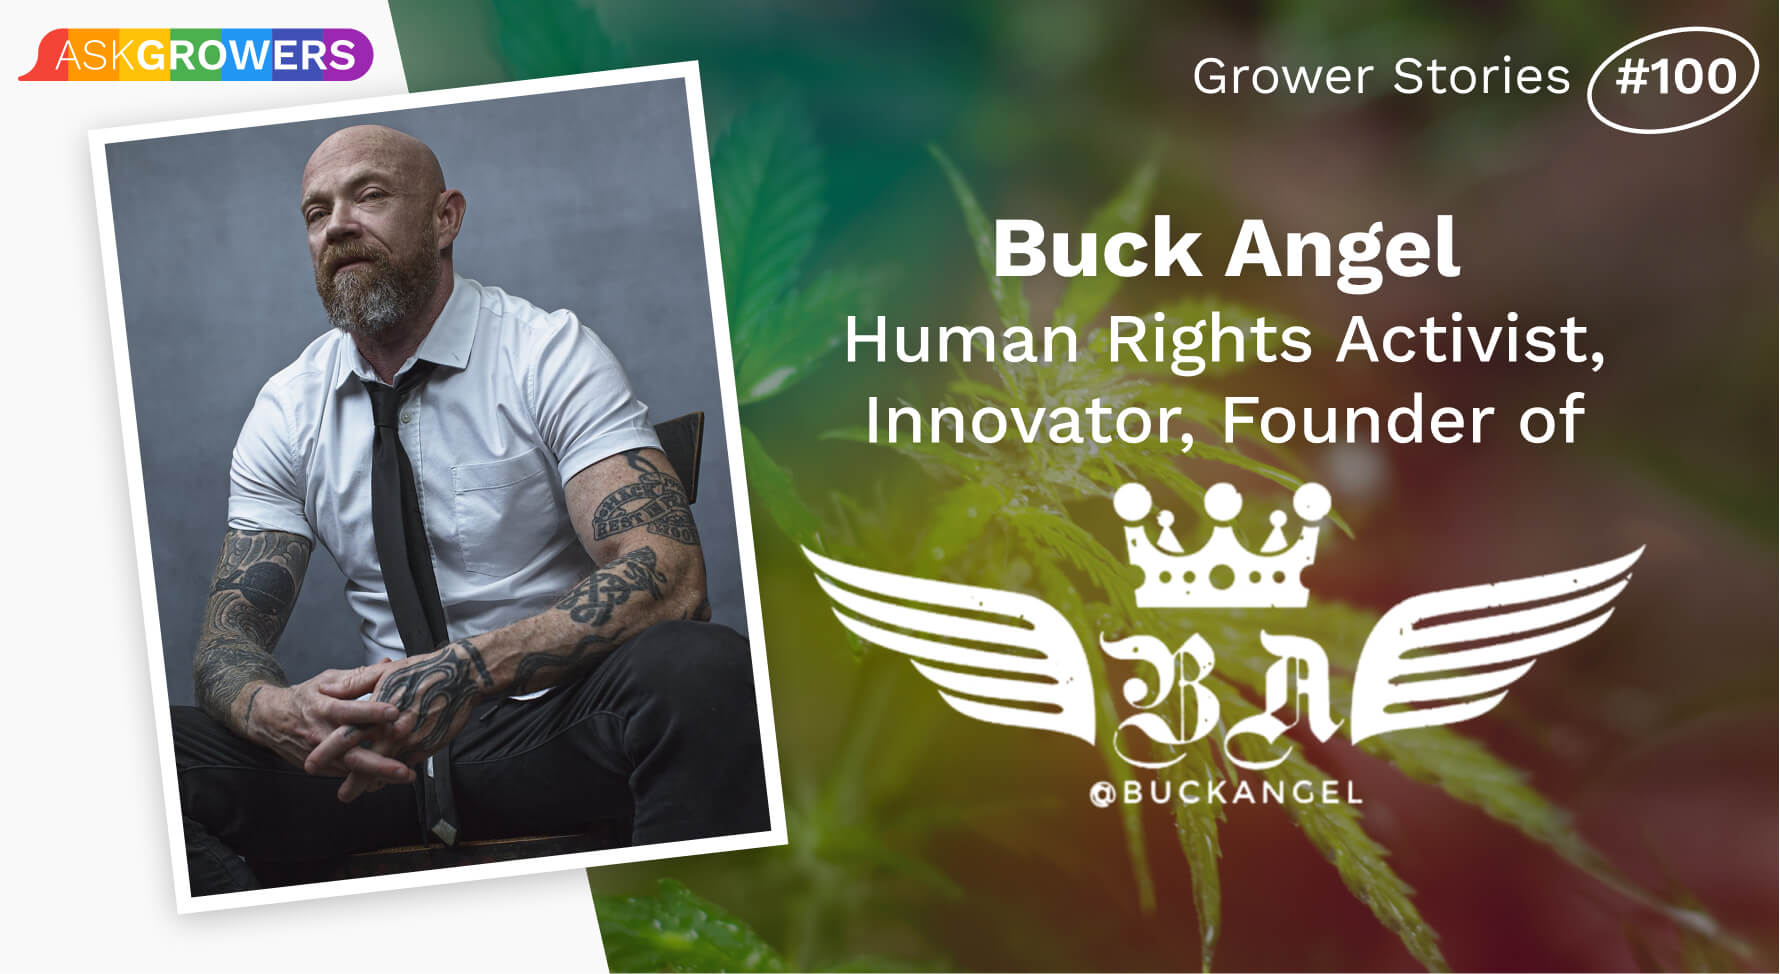 Grower Stories #100: Buck Angel